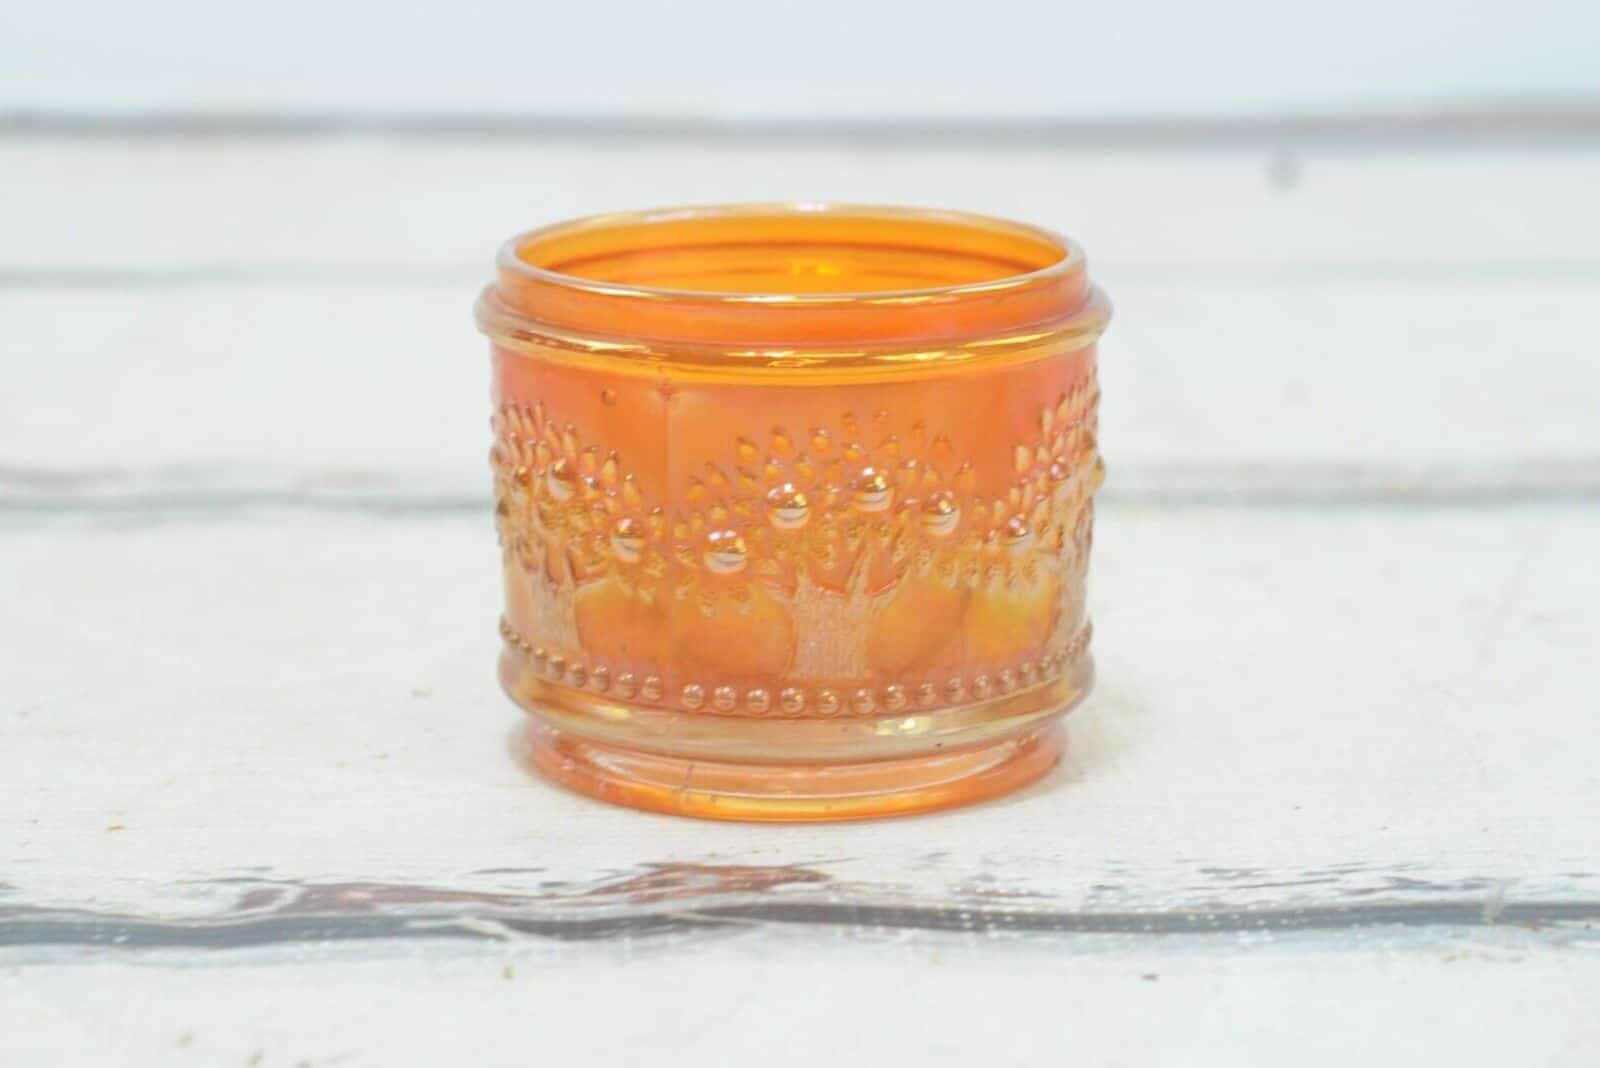 marigold food coloring in a jar